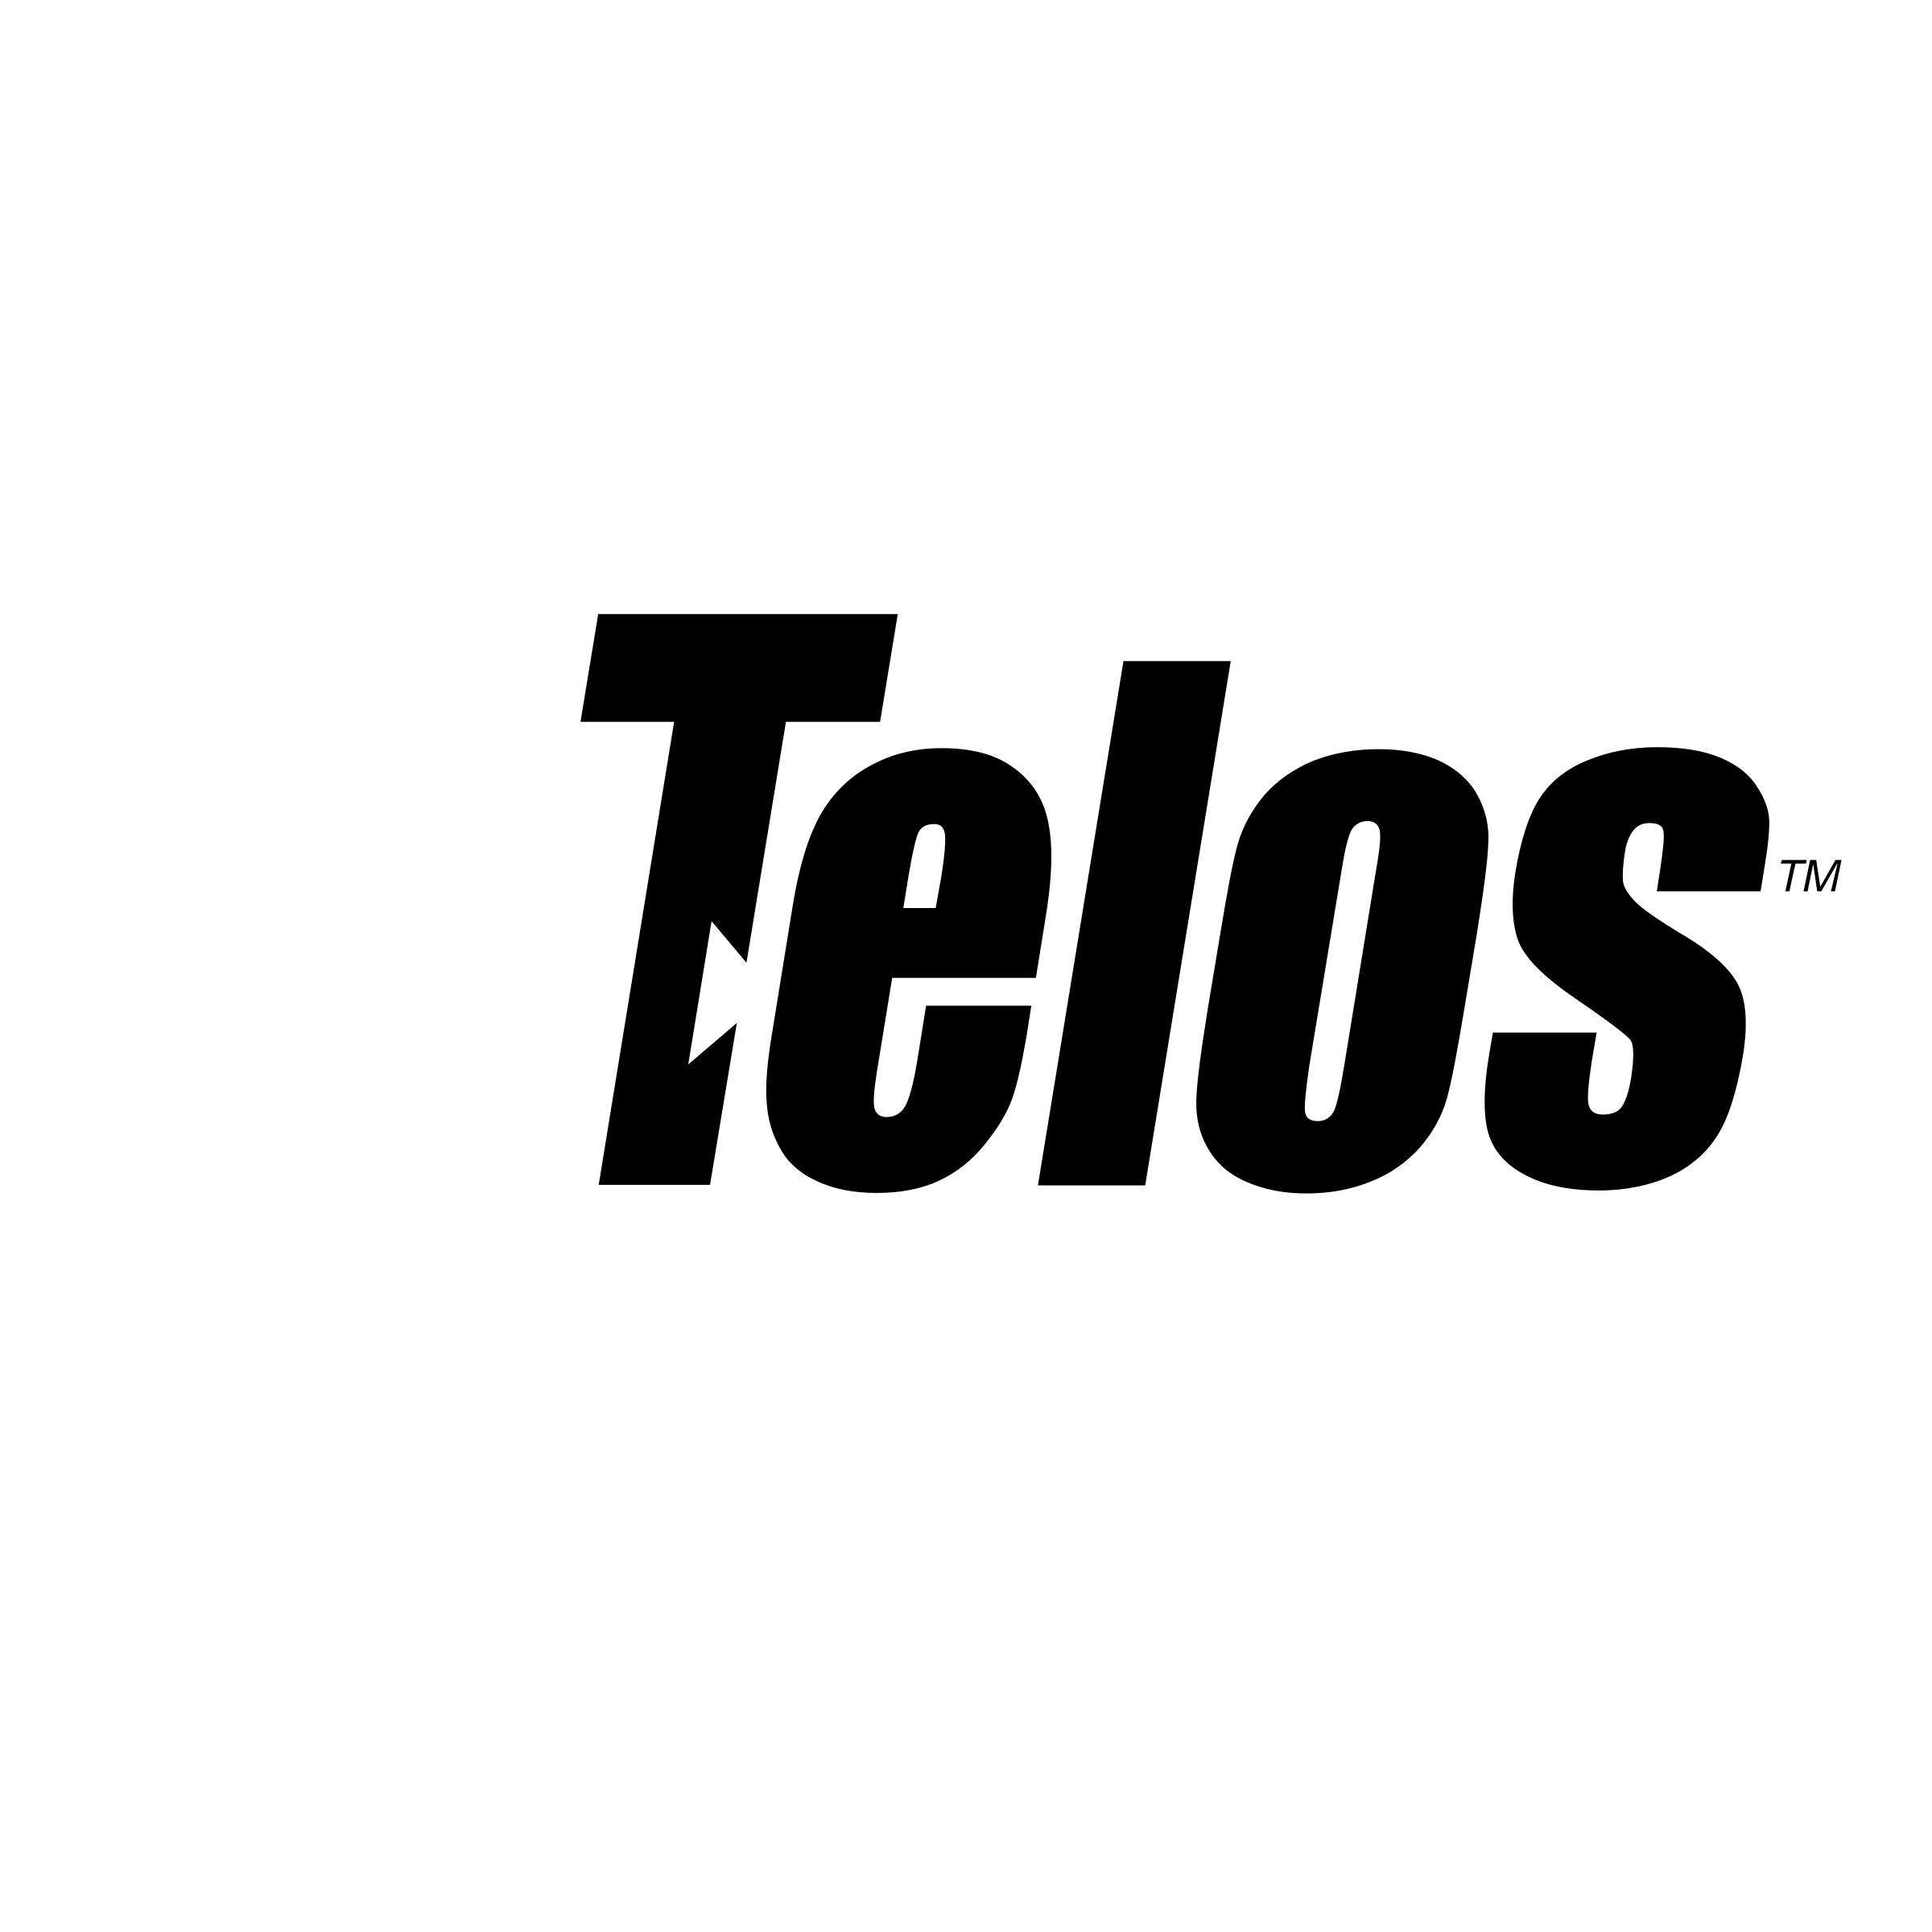 nTelos Logo - nTelos Logo PNG Transparent & SVG Vector - Freebie Supply